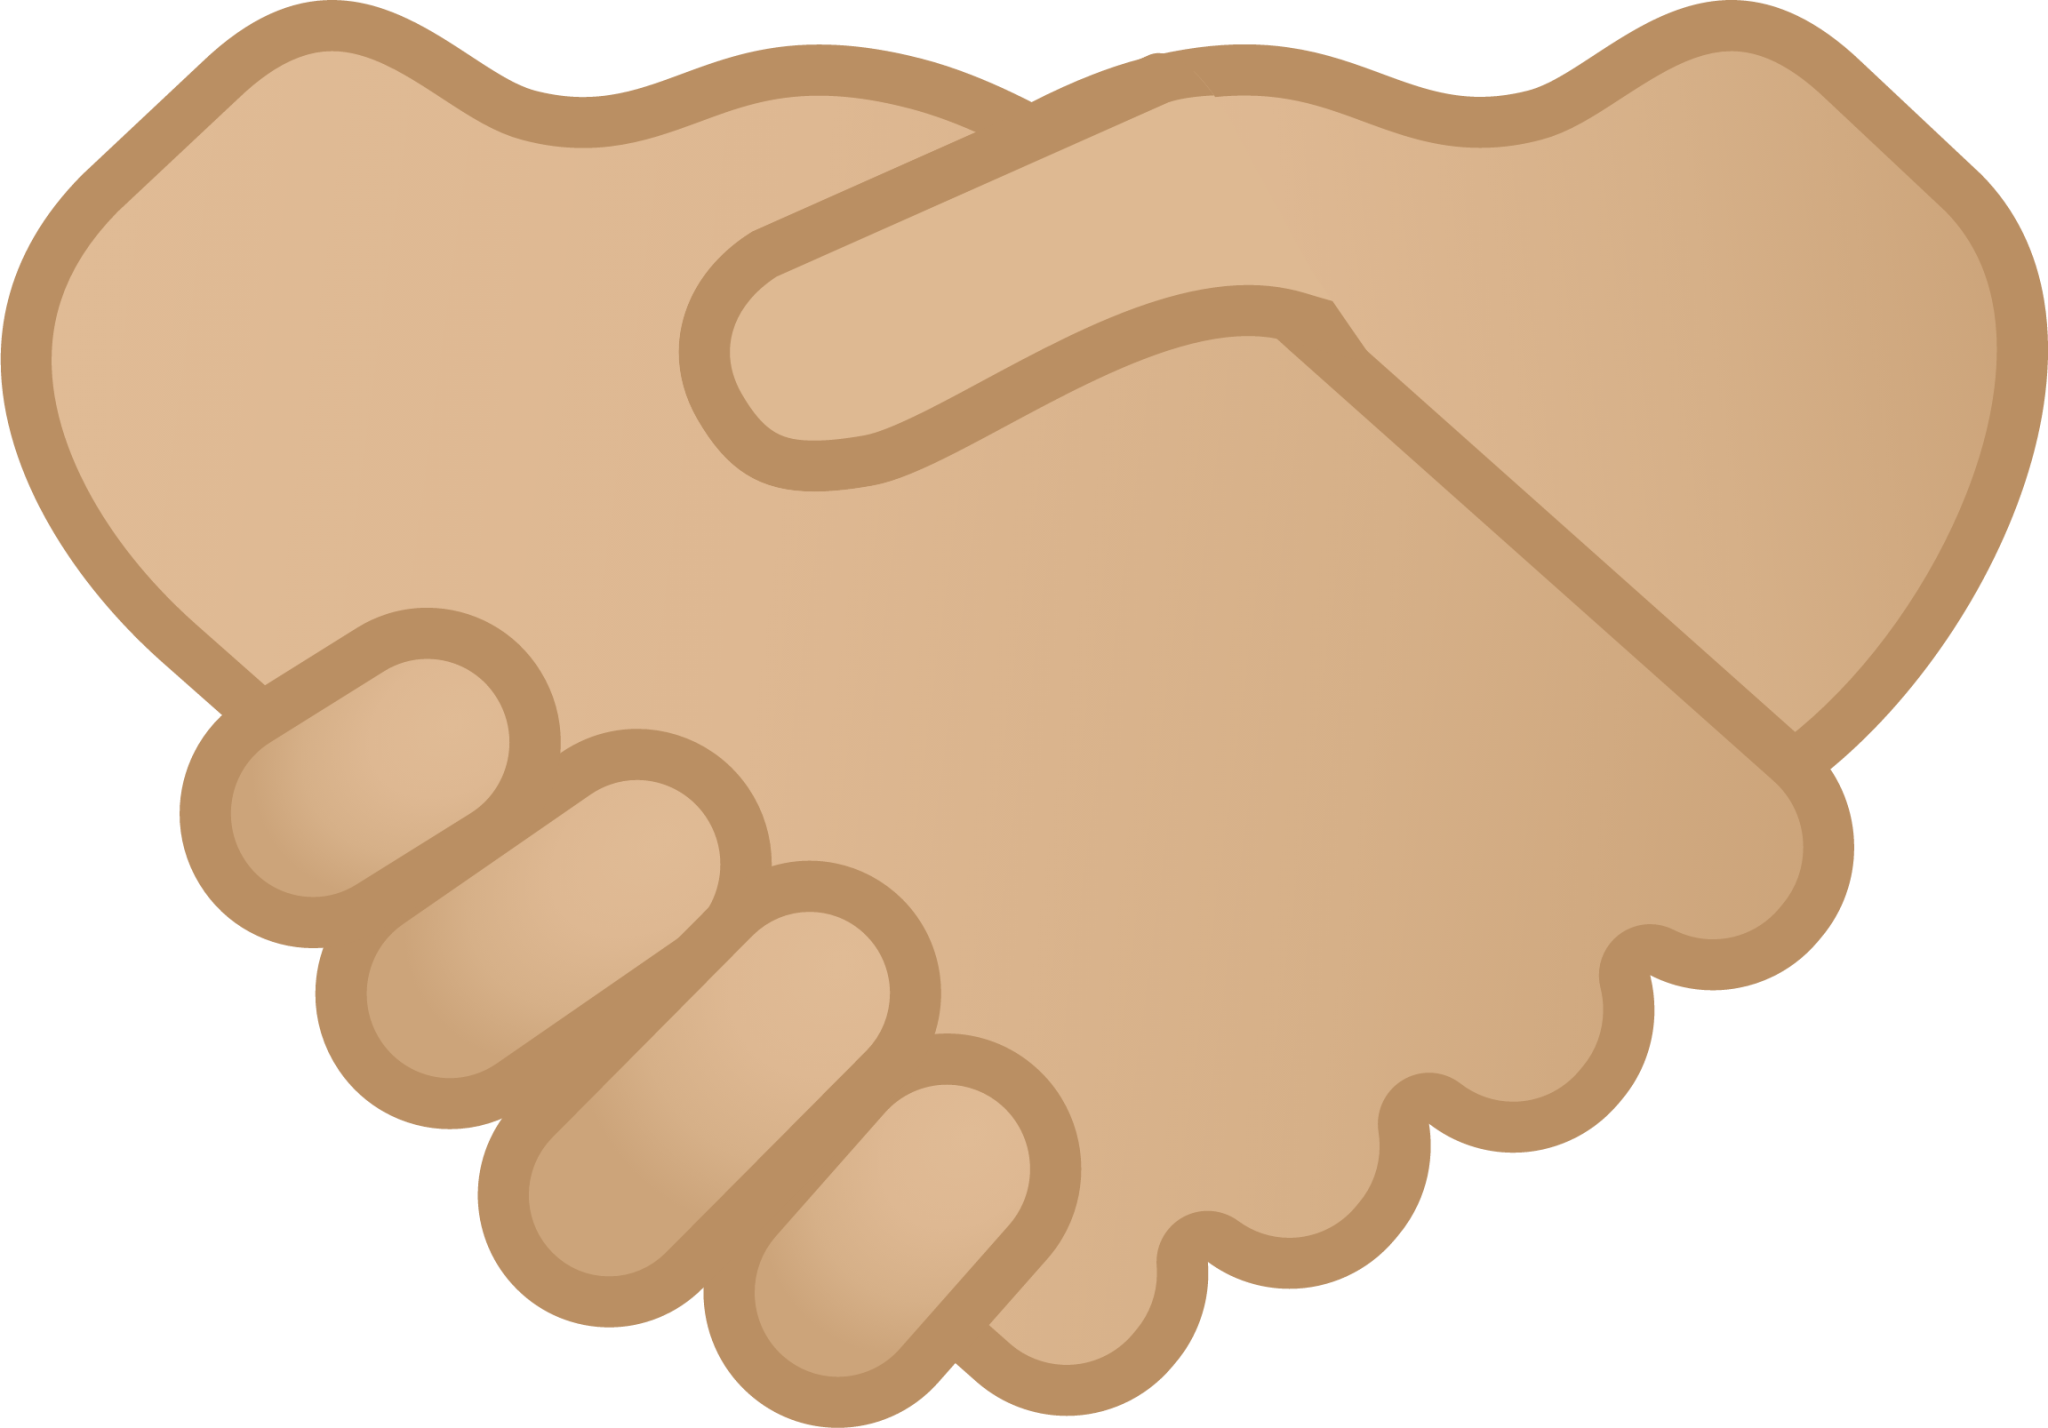 handshake tone 2 emoji